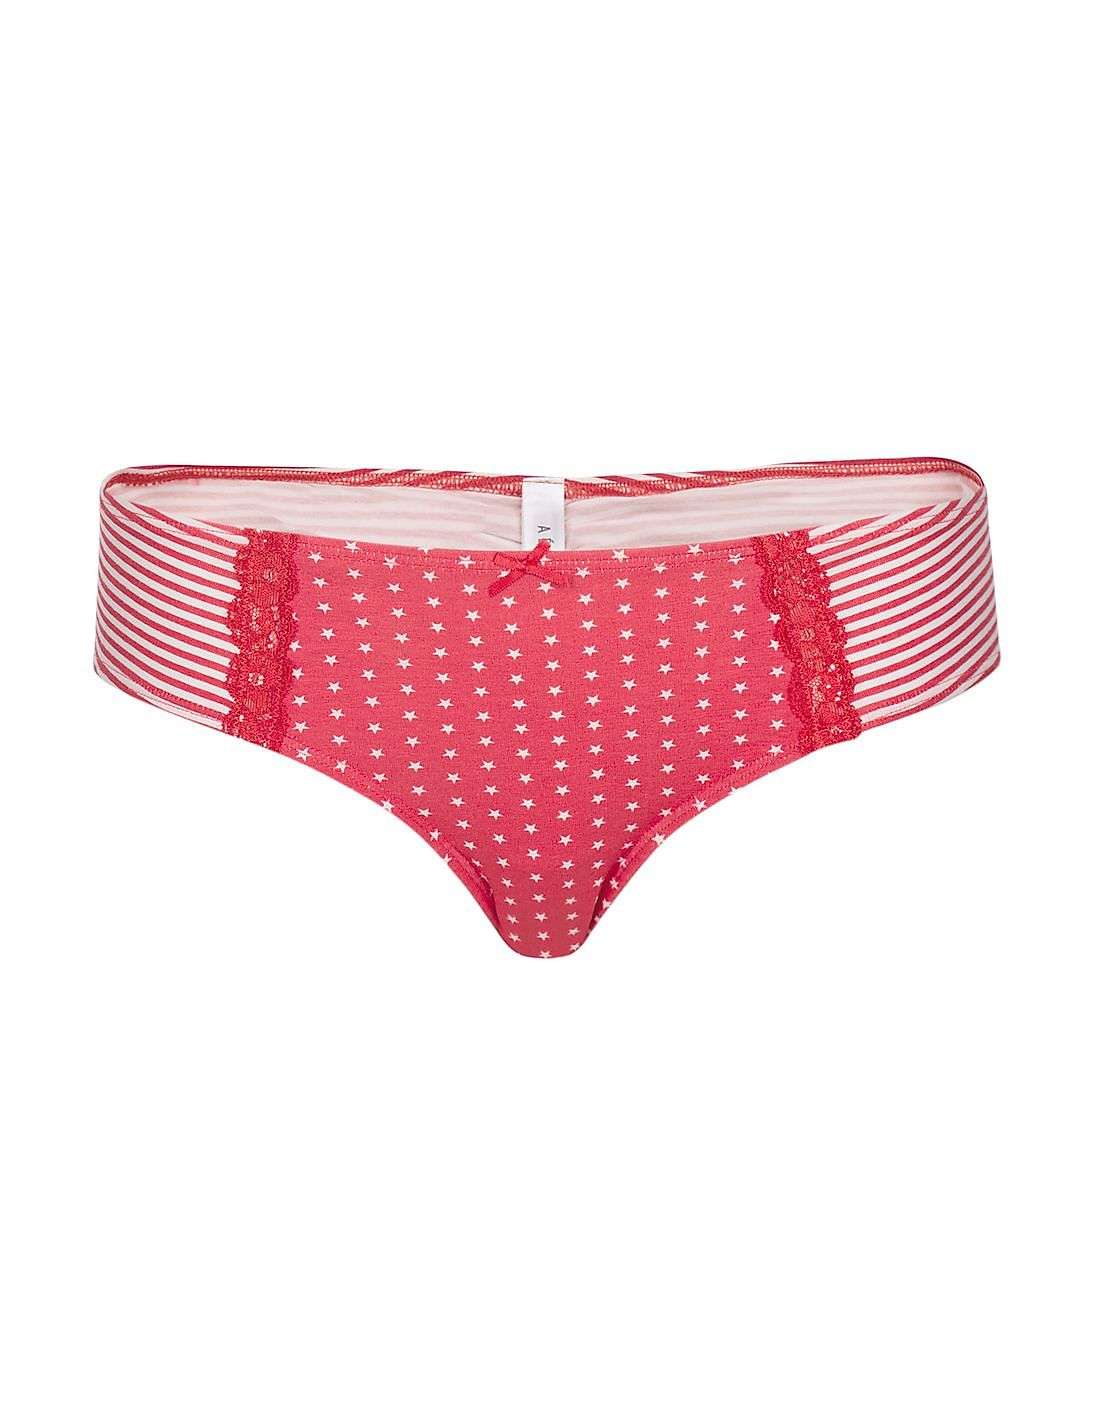 Buy Aeropostale Printed Lace Trim Panties - NNNOW.com